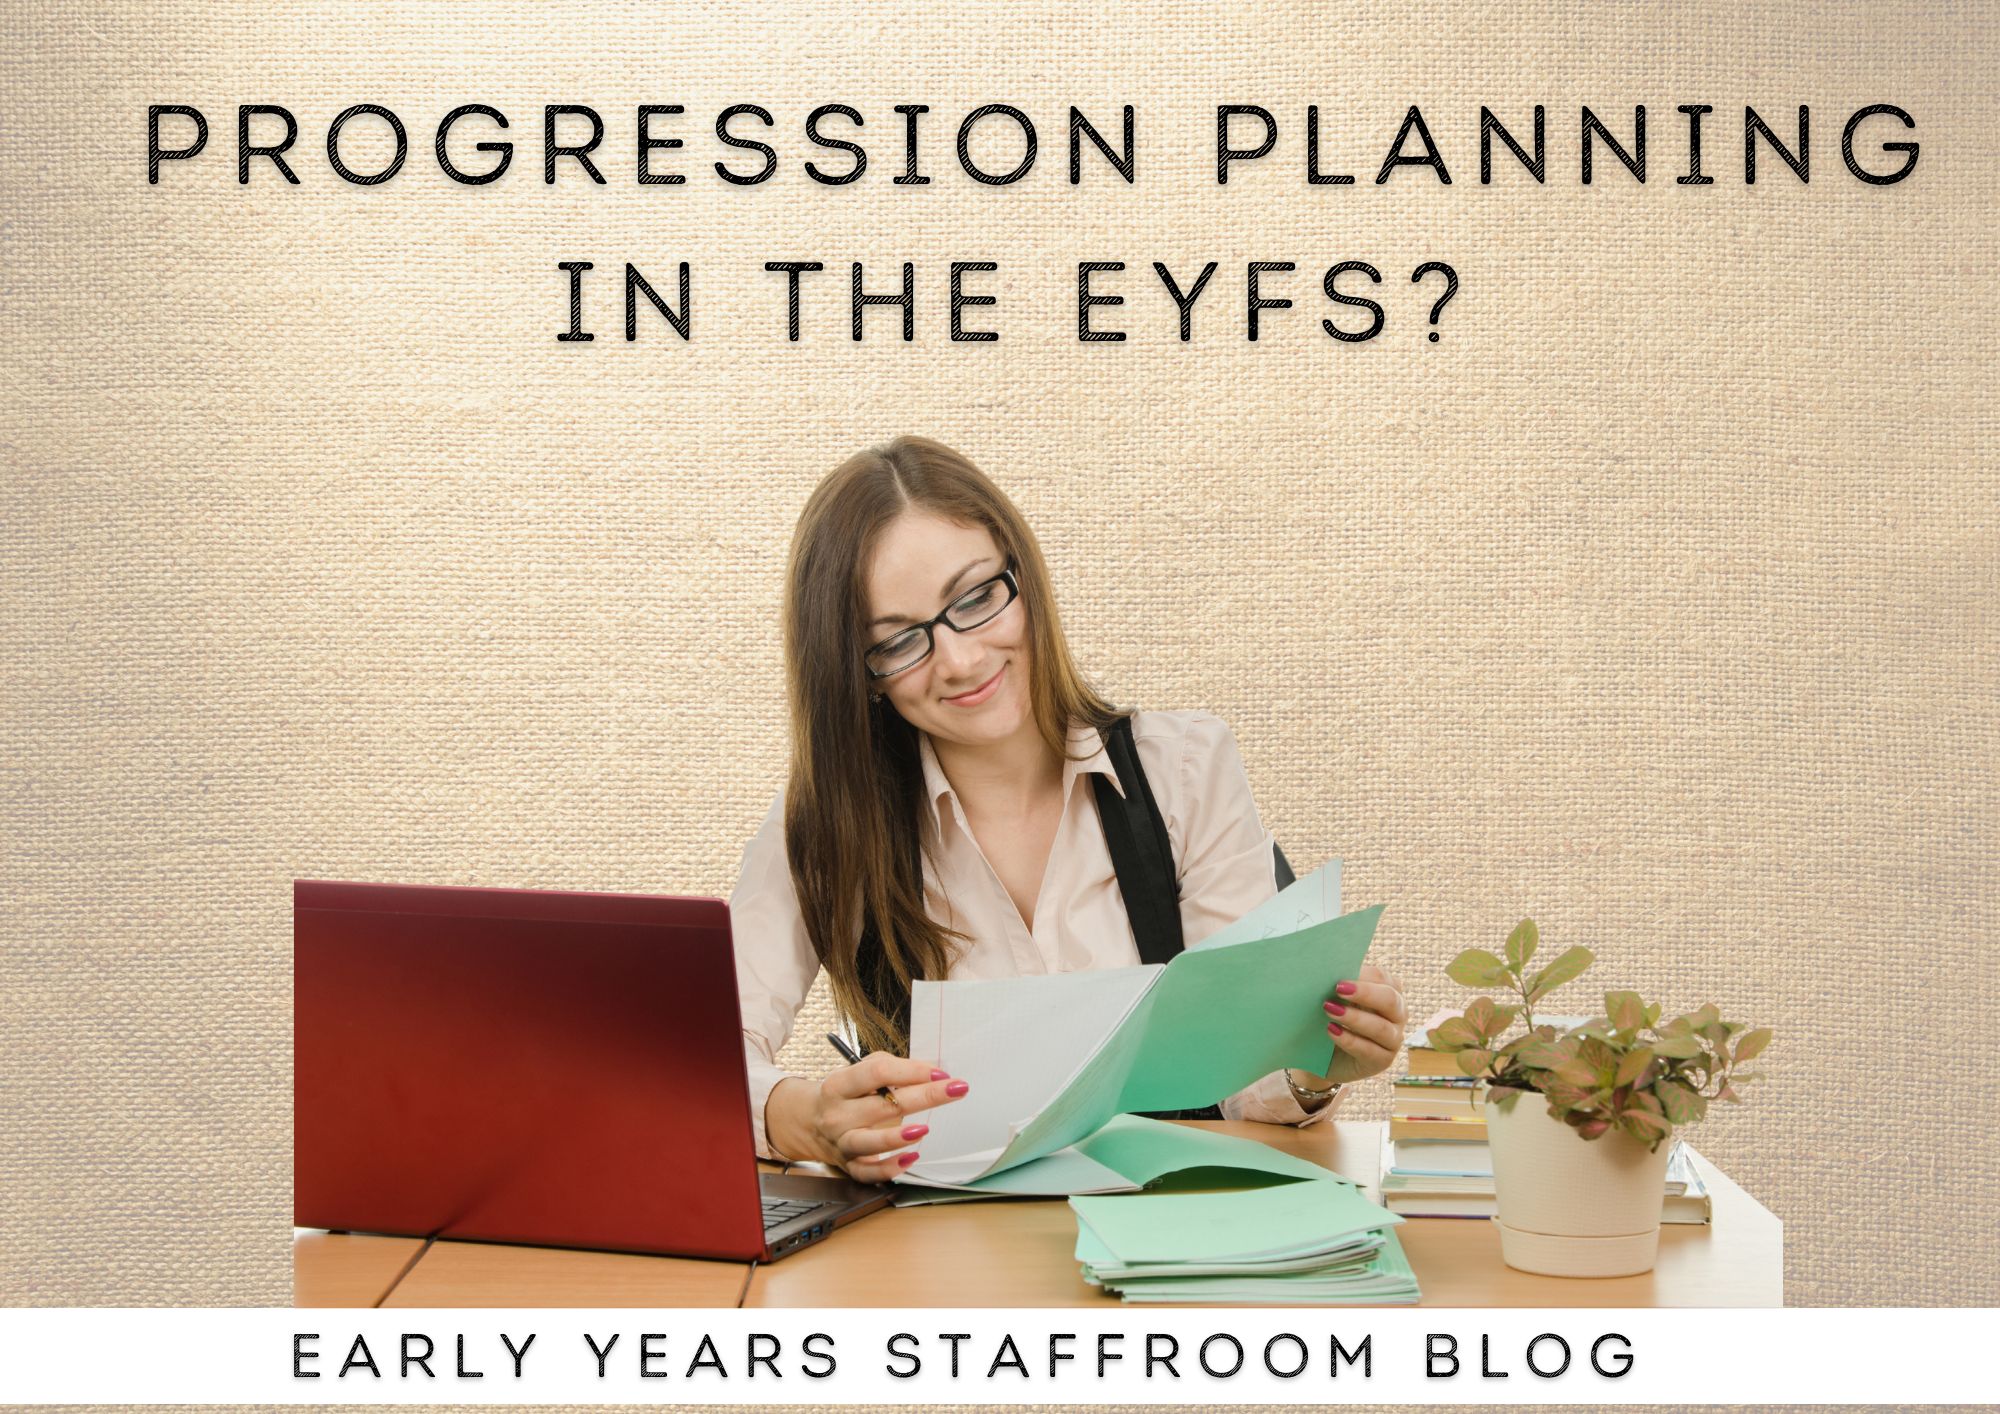 Progression Planning Blog Post - Early Years Staffroom